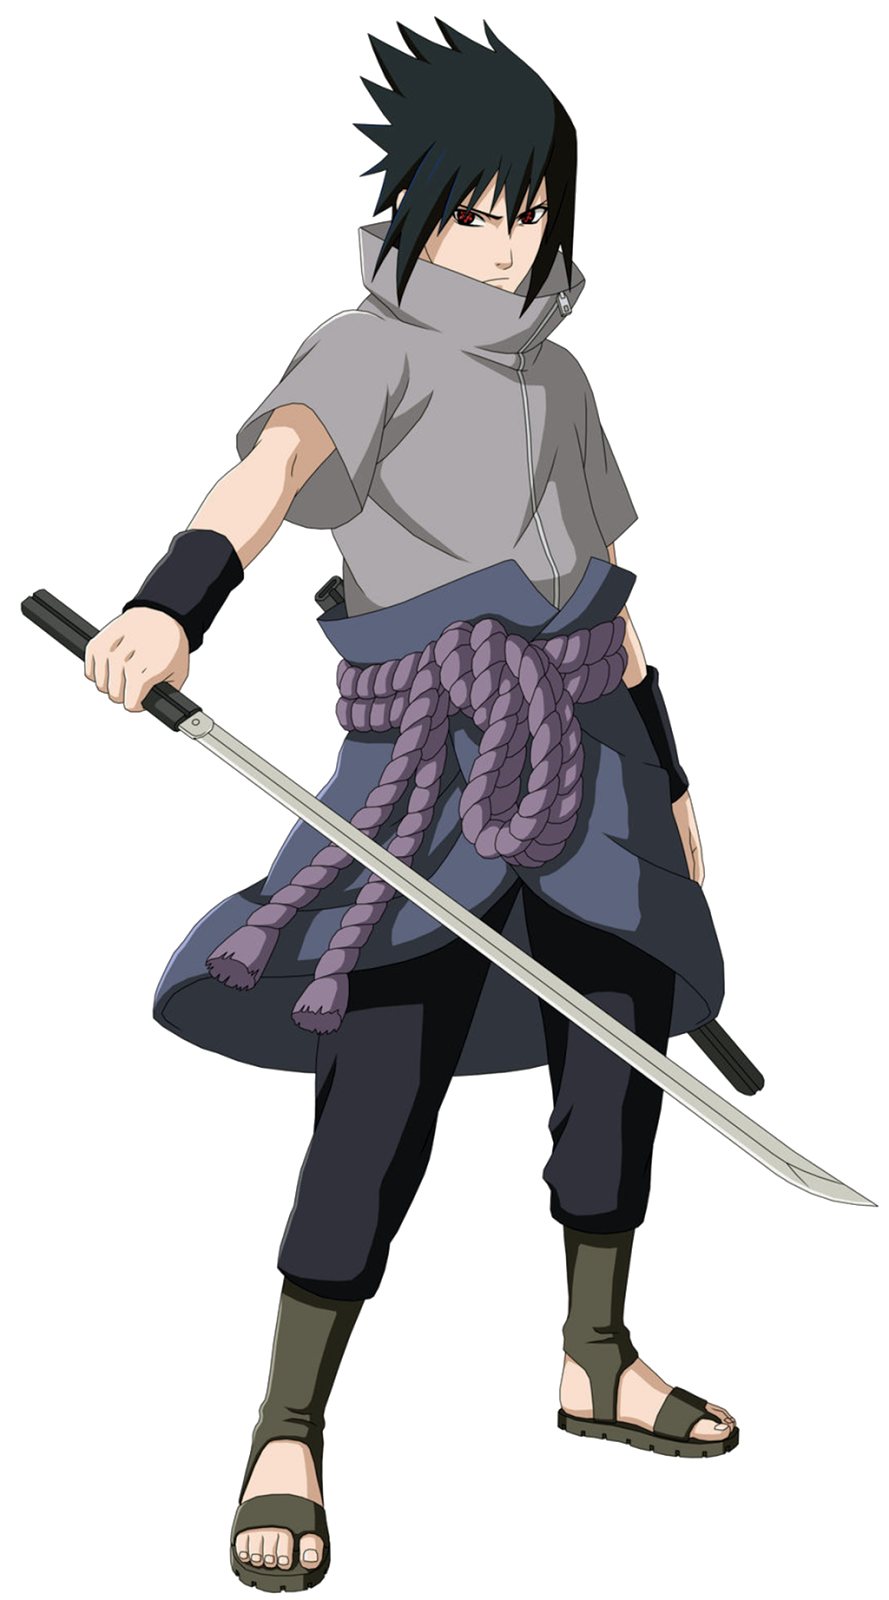 Naruto - Sasuke as Hokage